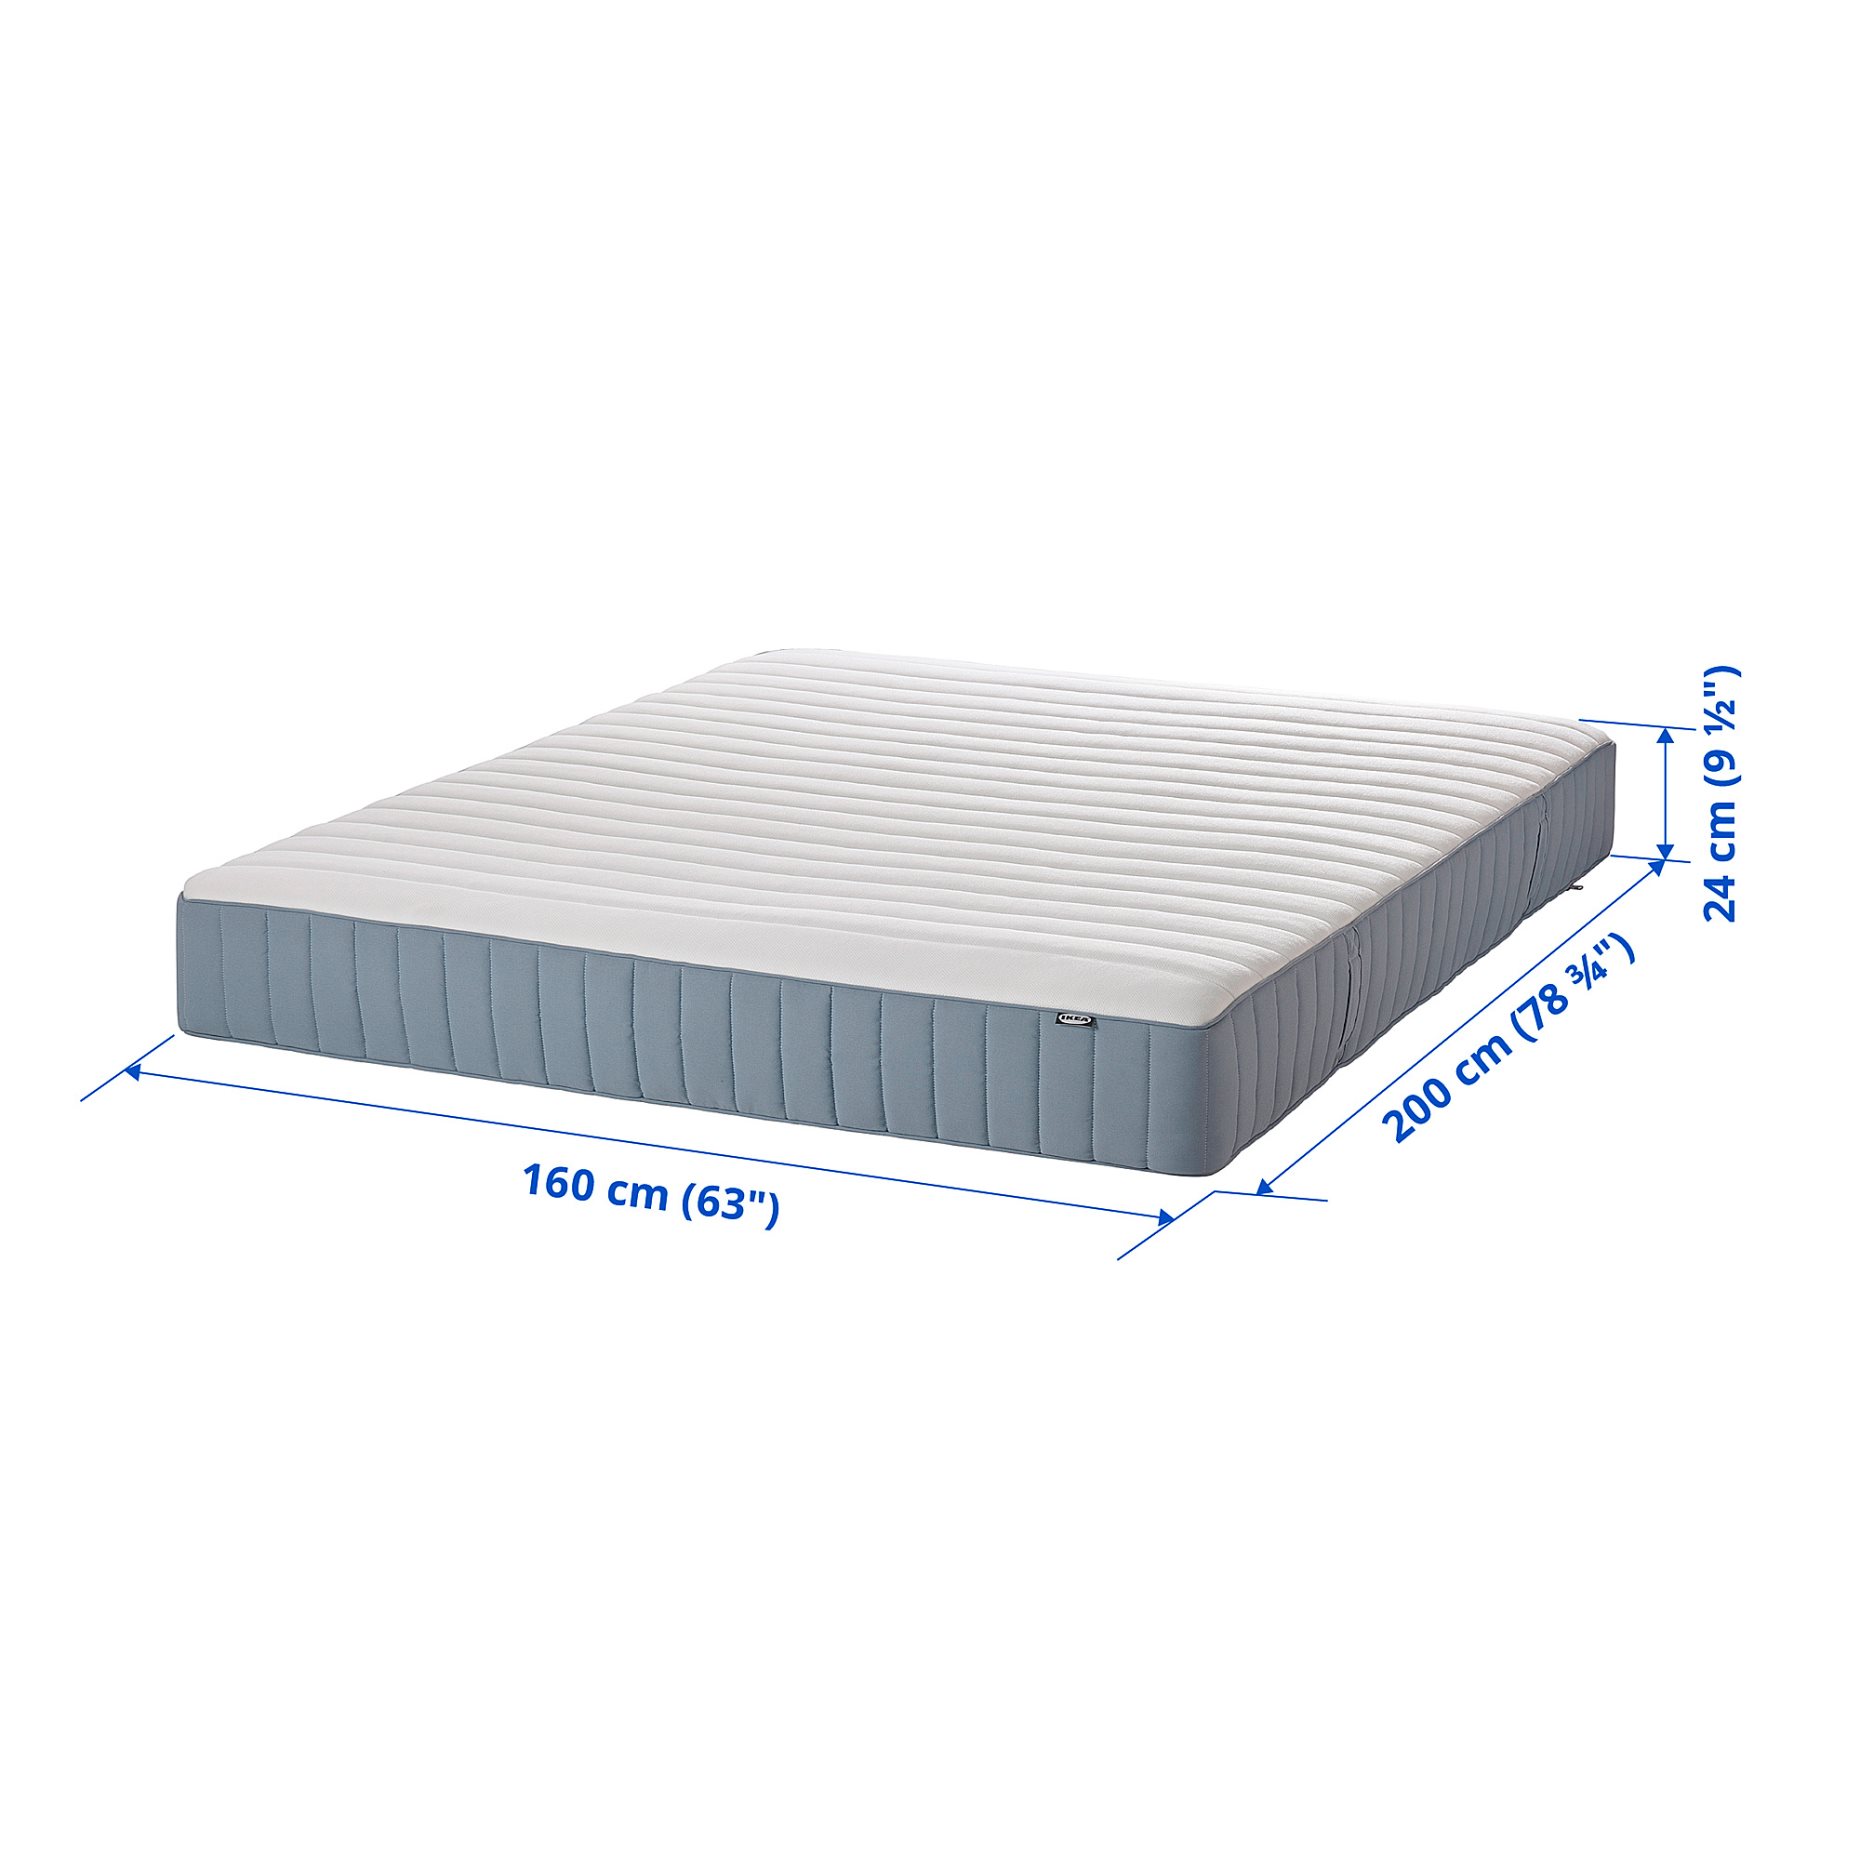 VALEVÅG, pocket sprung mattress/extra firm, 160x200 cm, 204.699.49